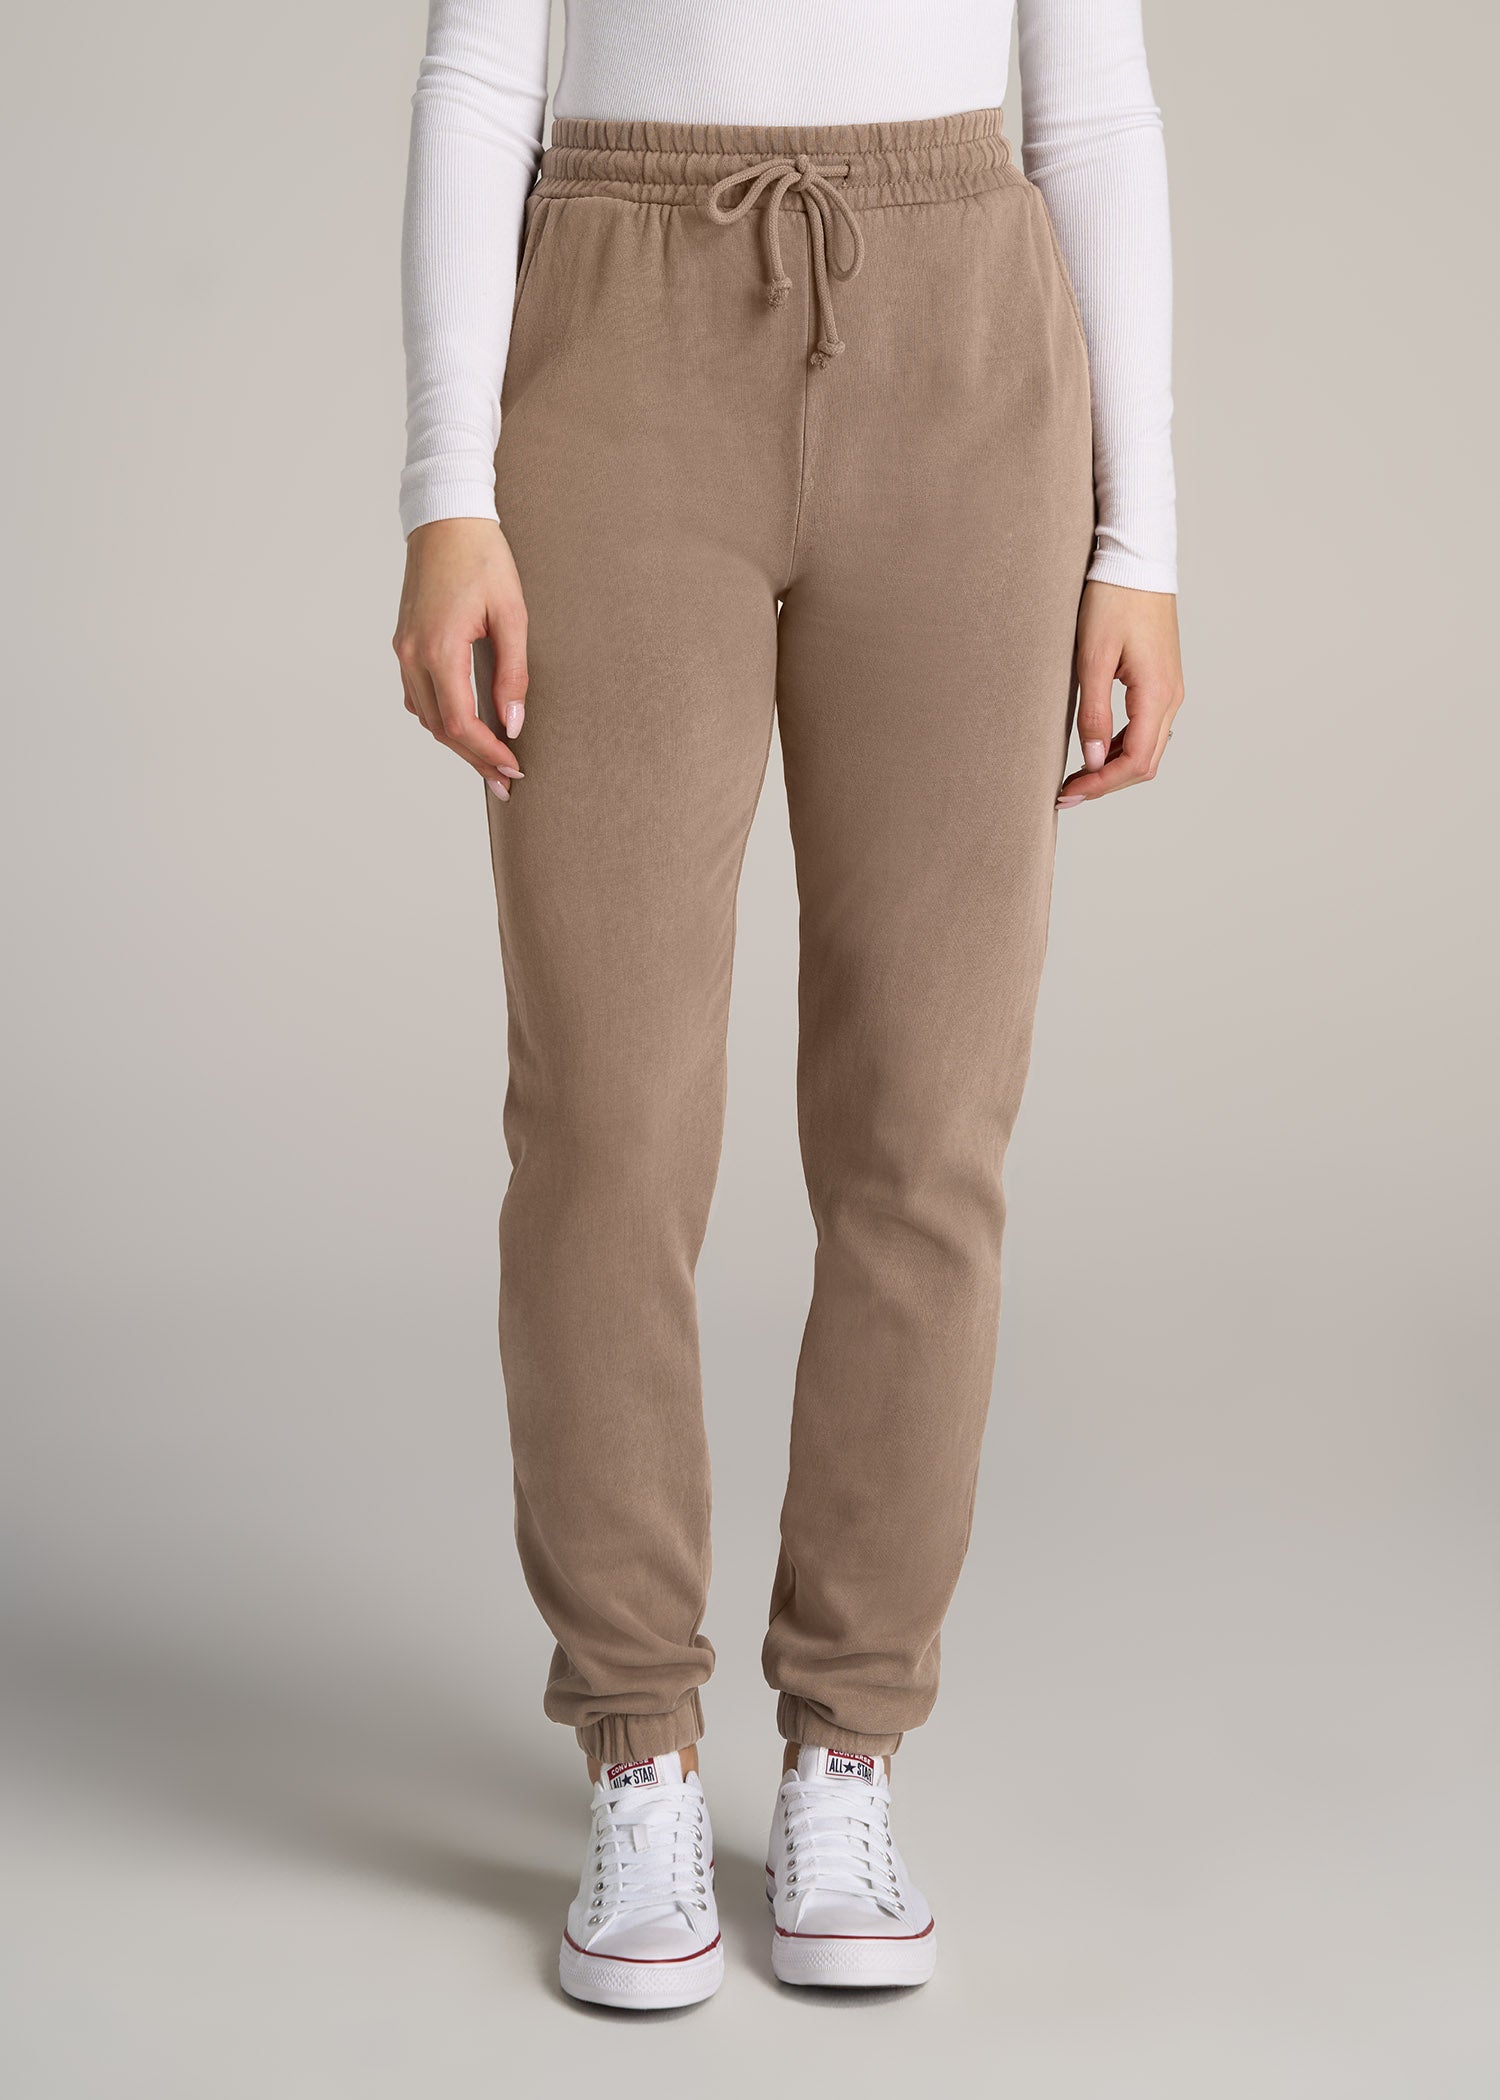 Women's Tall Wearever High-Waisted Garment-Dyed Sweatpants Latte